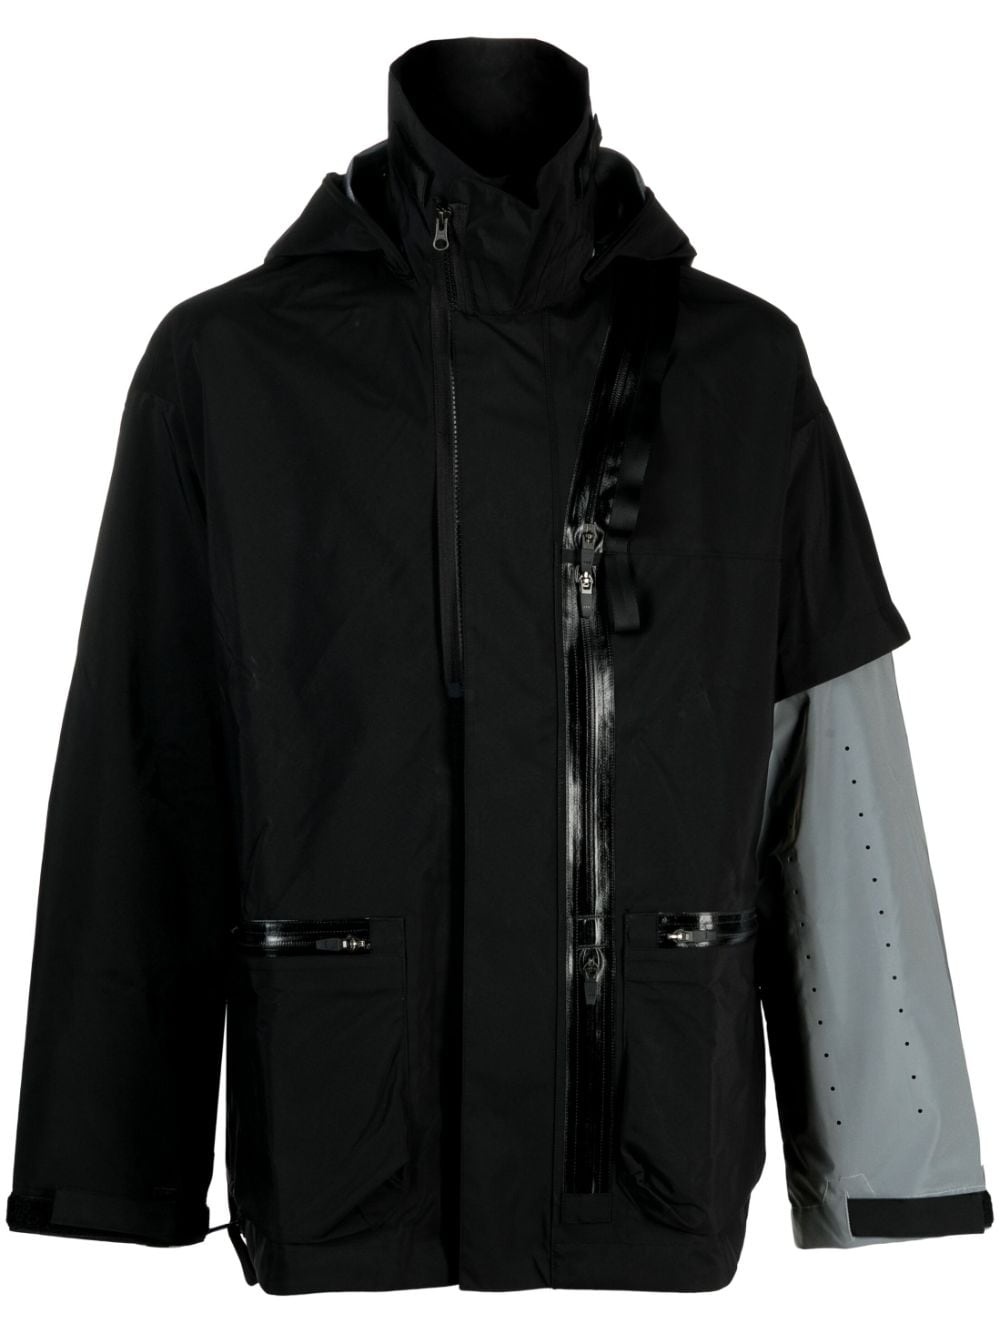 J115 Gore-Tex rain jacket - 1